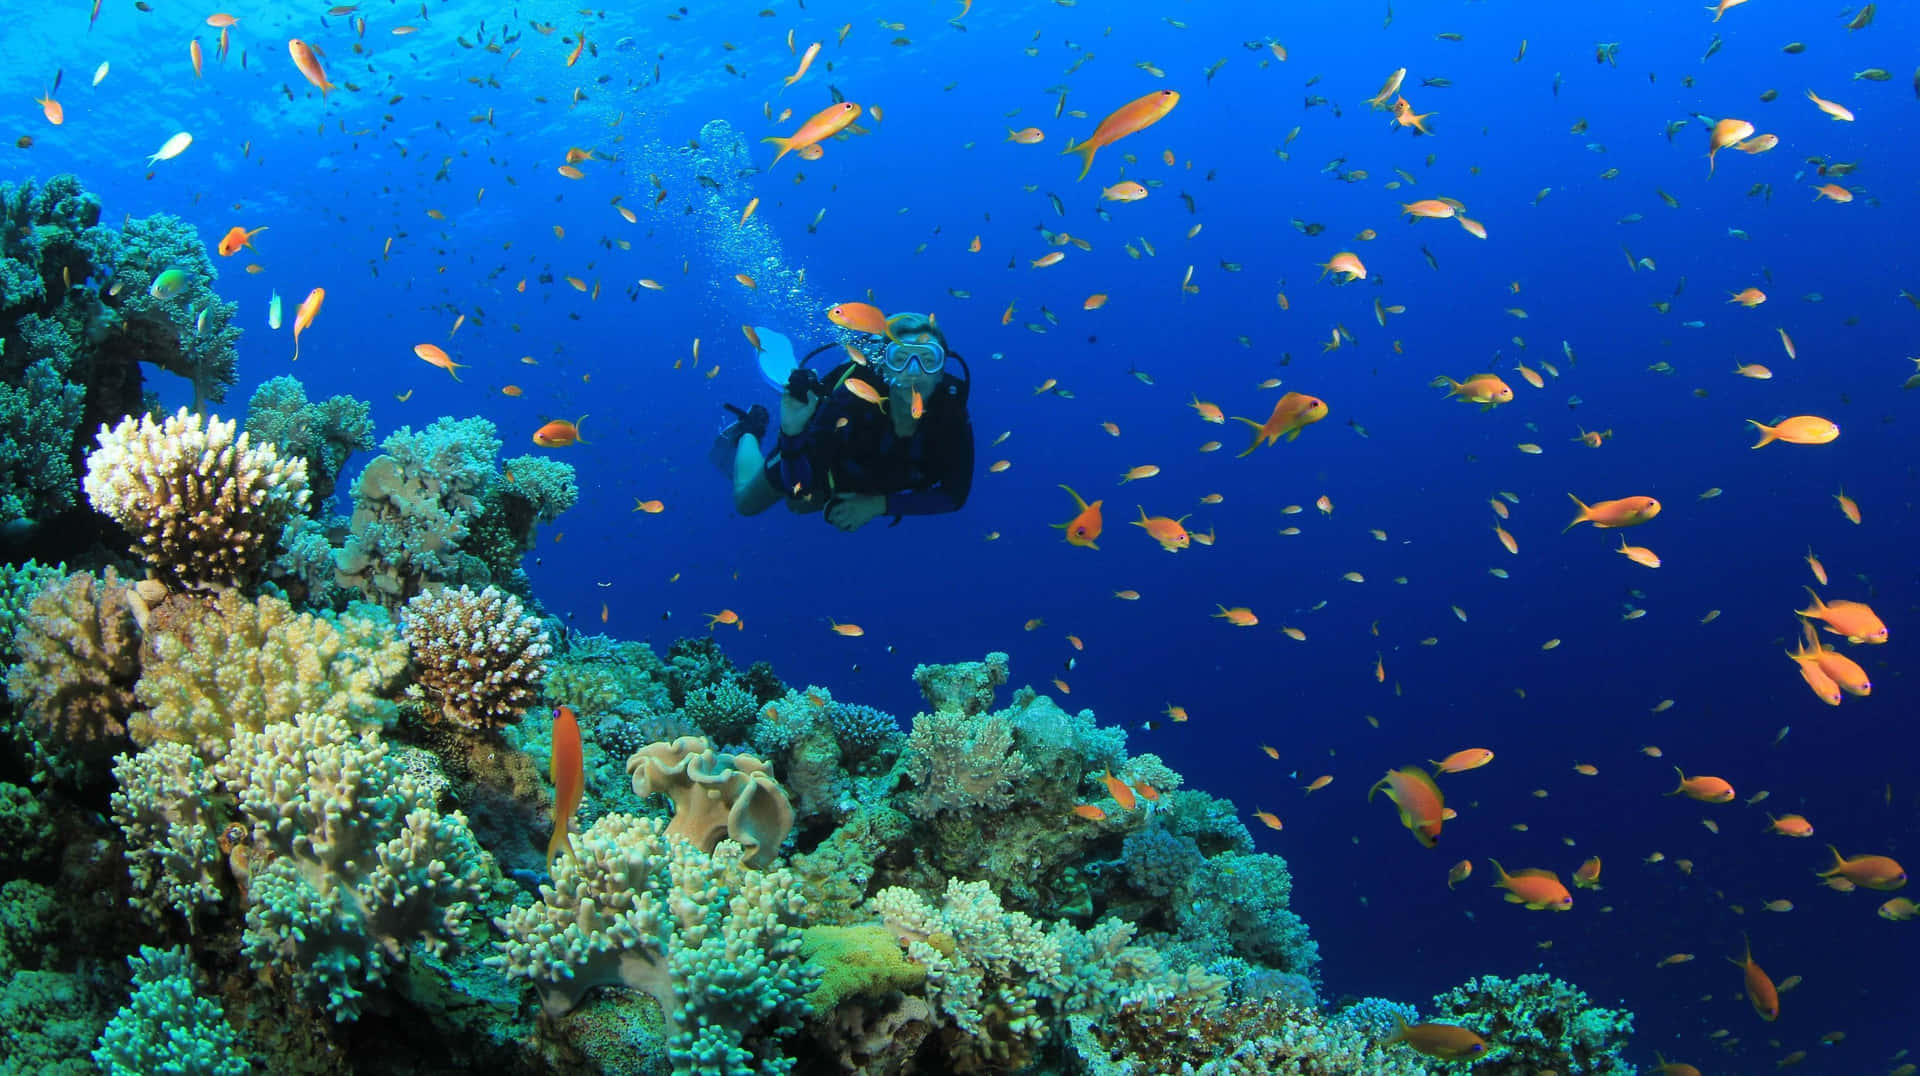 "Breathtaking Deep Sea Diving Adventure"